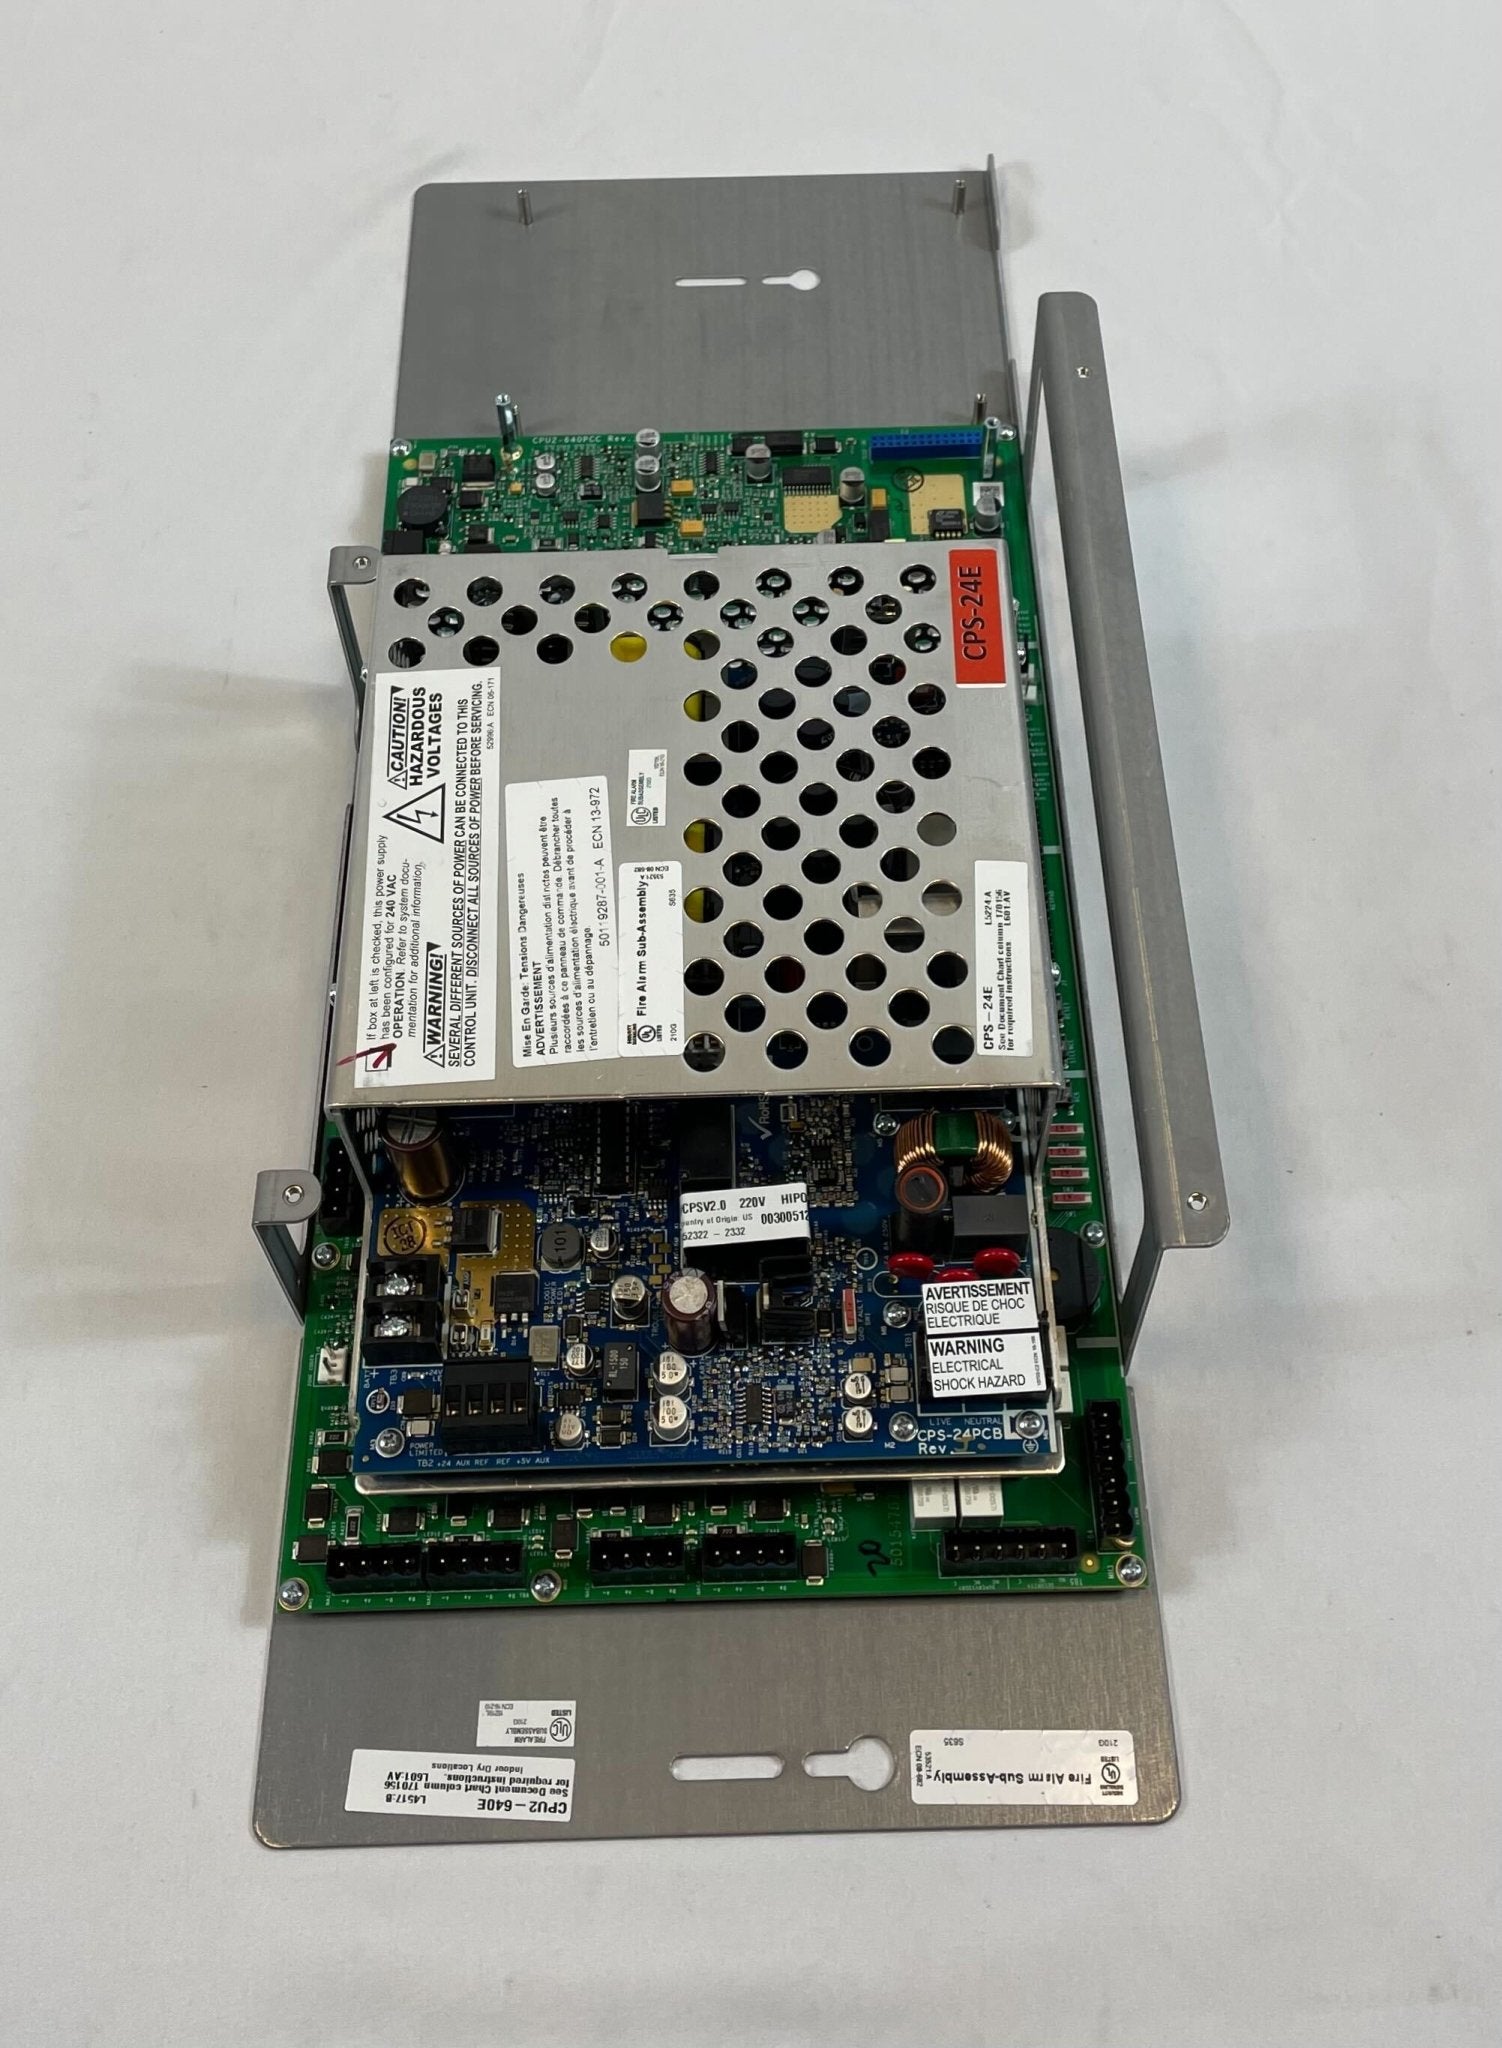 Notifier CPU2-640E - The Fire Alarm Supplier